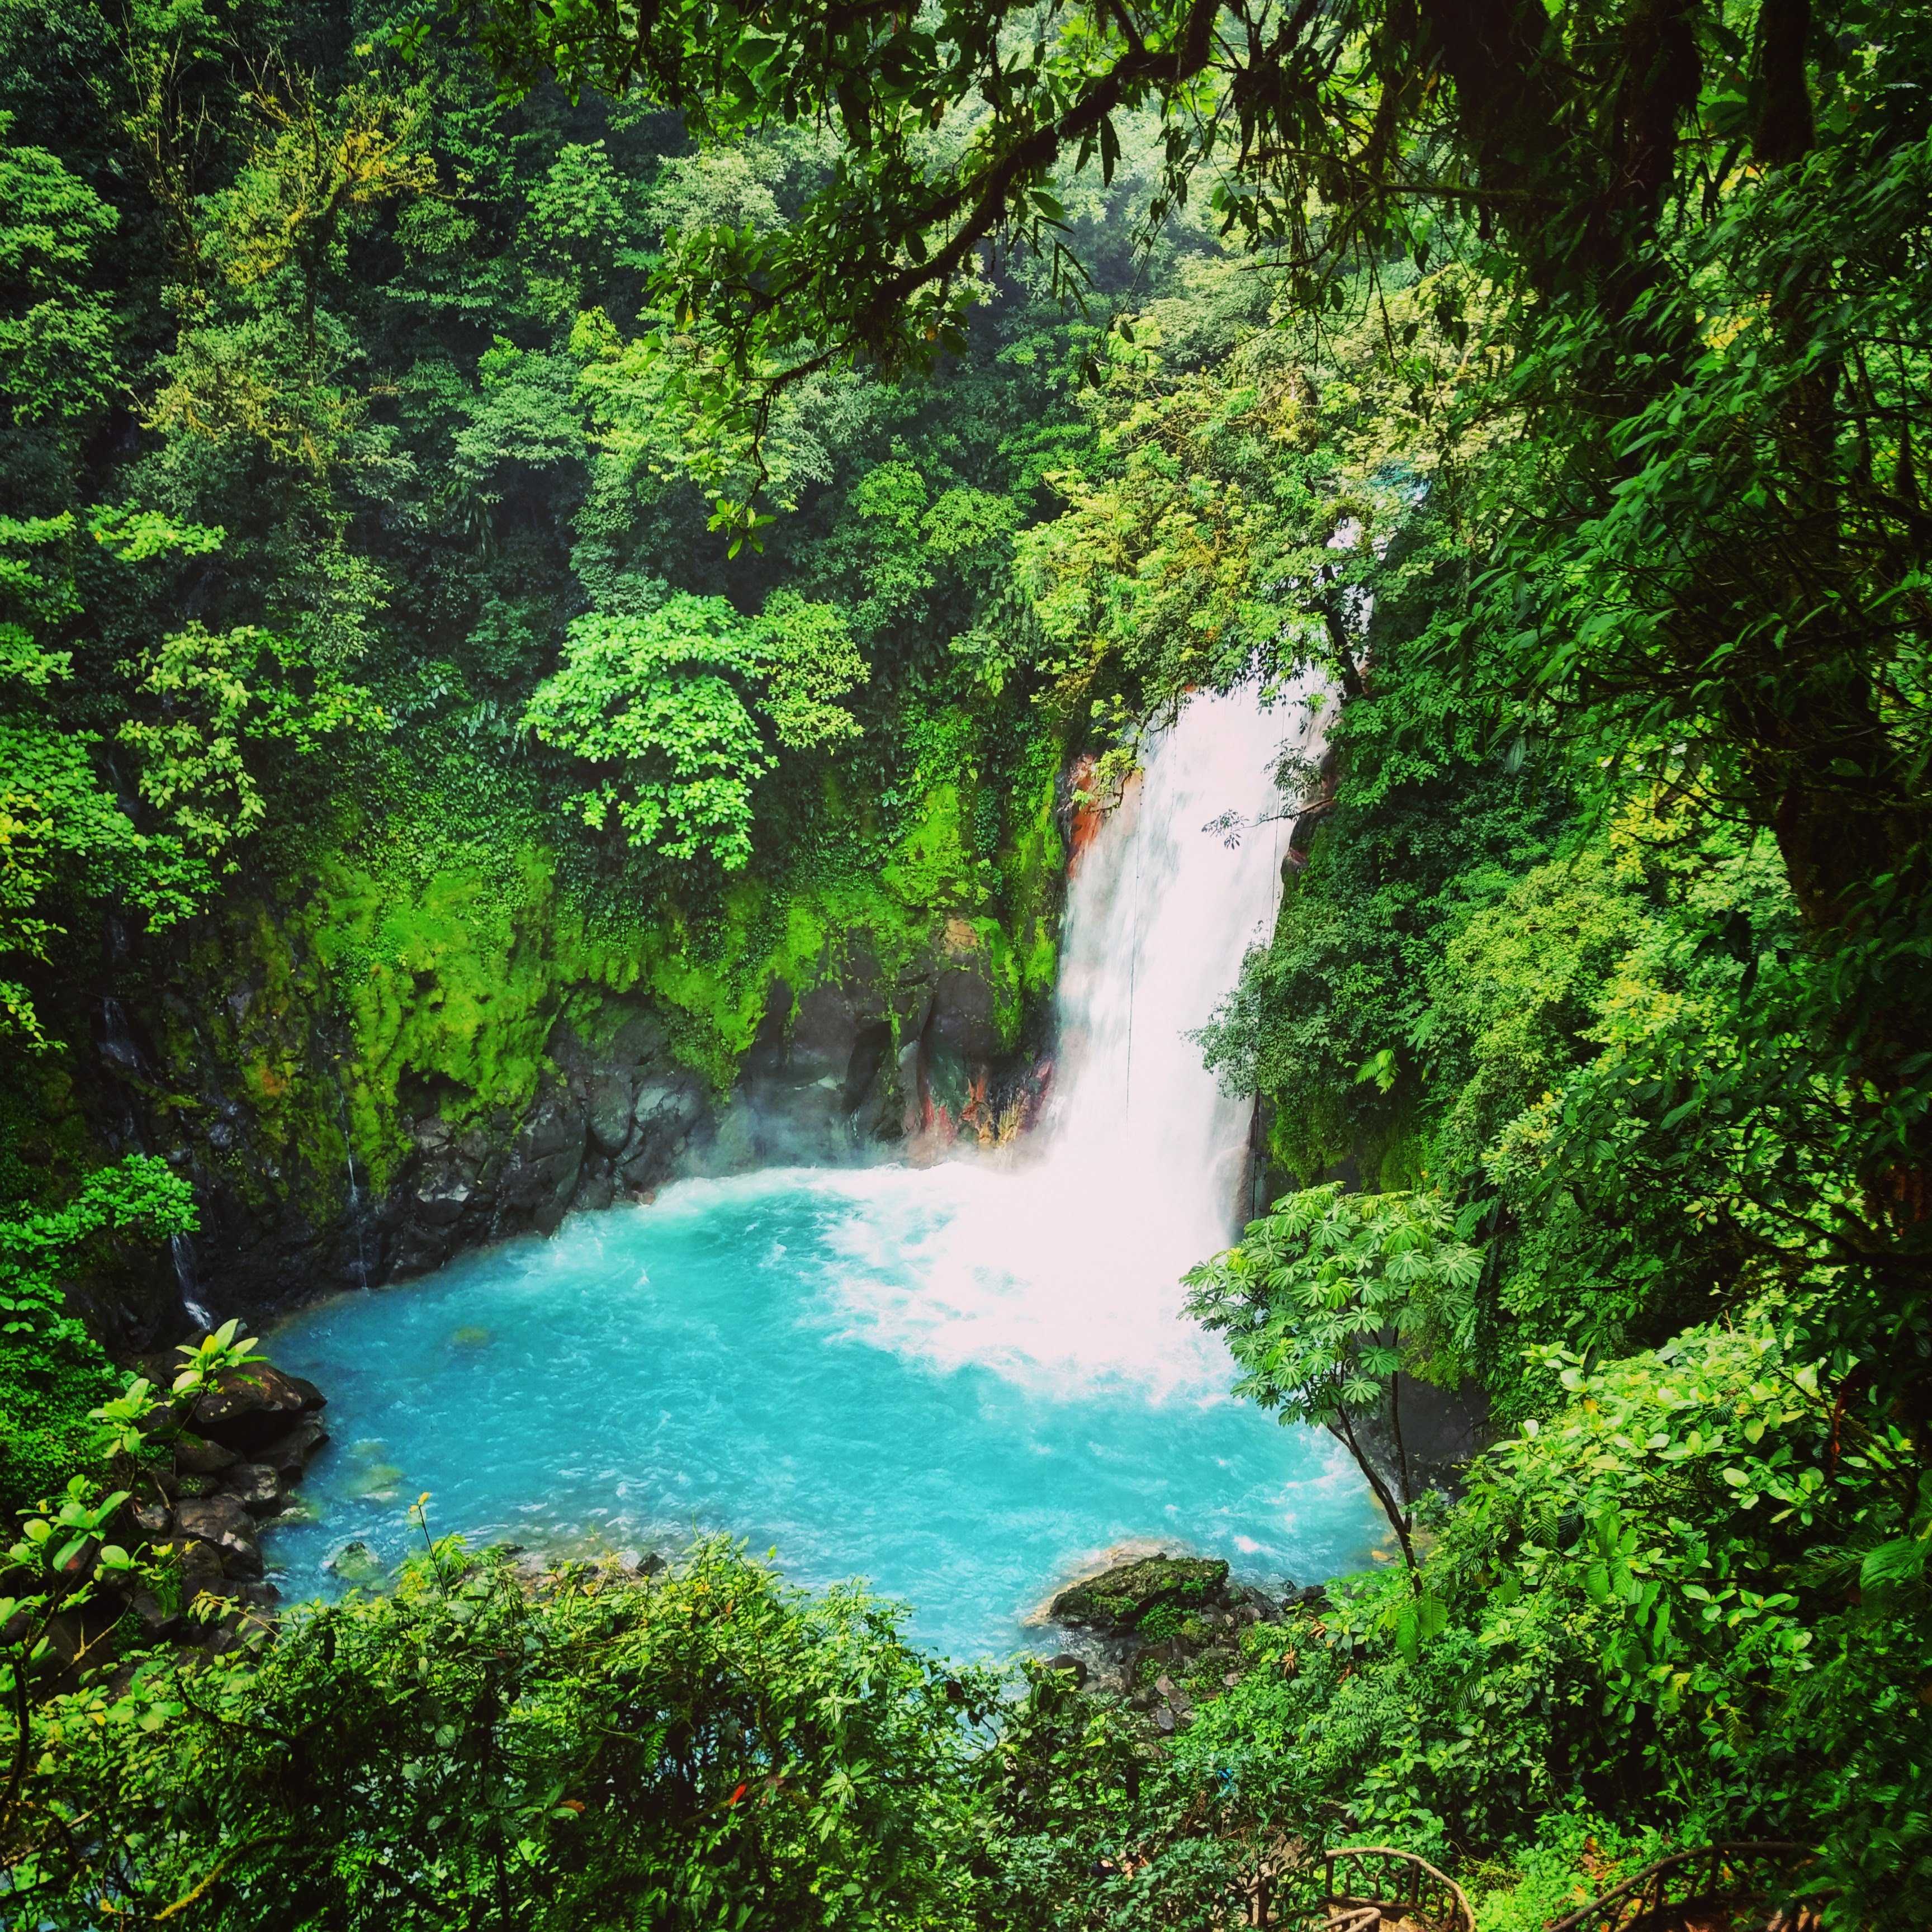 Rio Celeste waterfall and surrounding trees